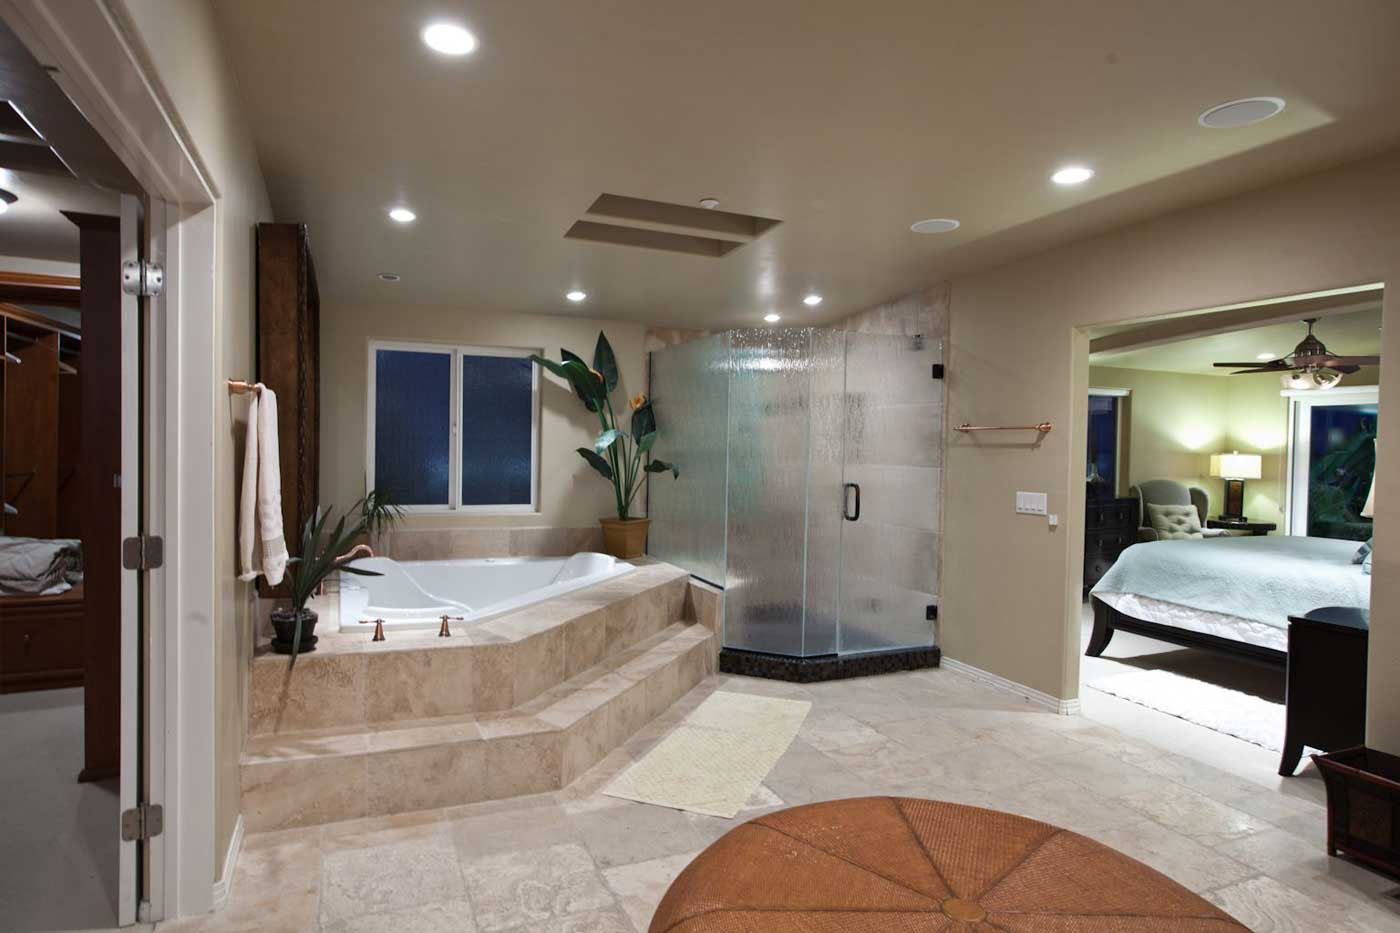 Master Bedroom Bathroom Ideas Luxury Master Bedroom Ideas Considering the aspects Amaza Design